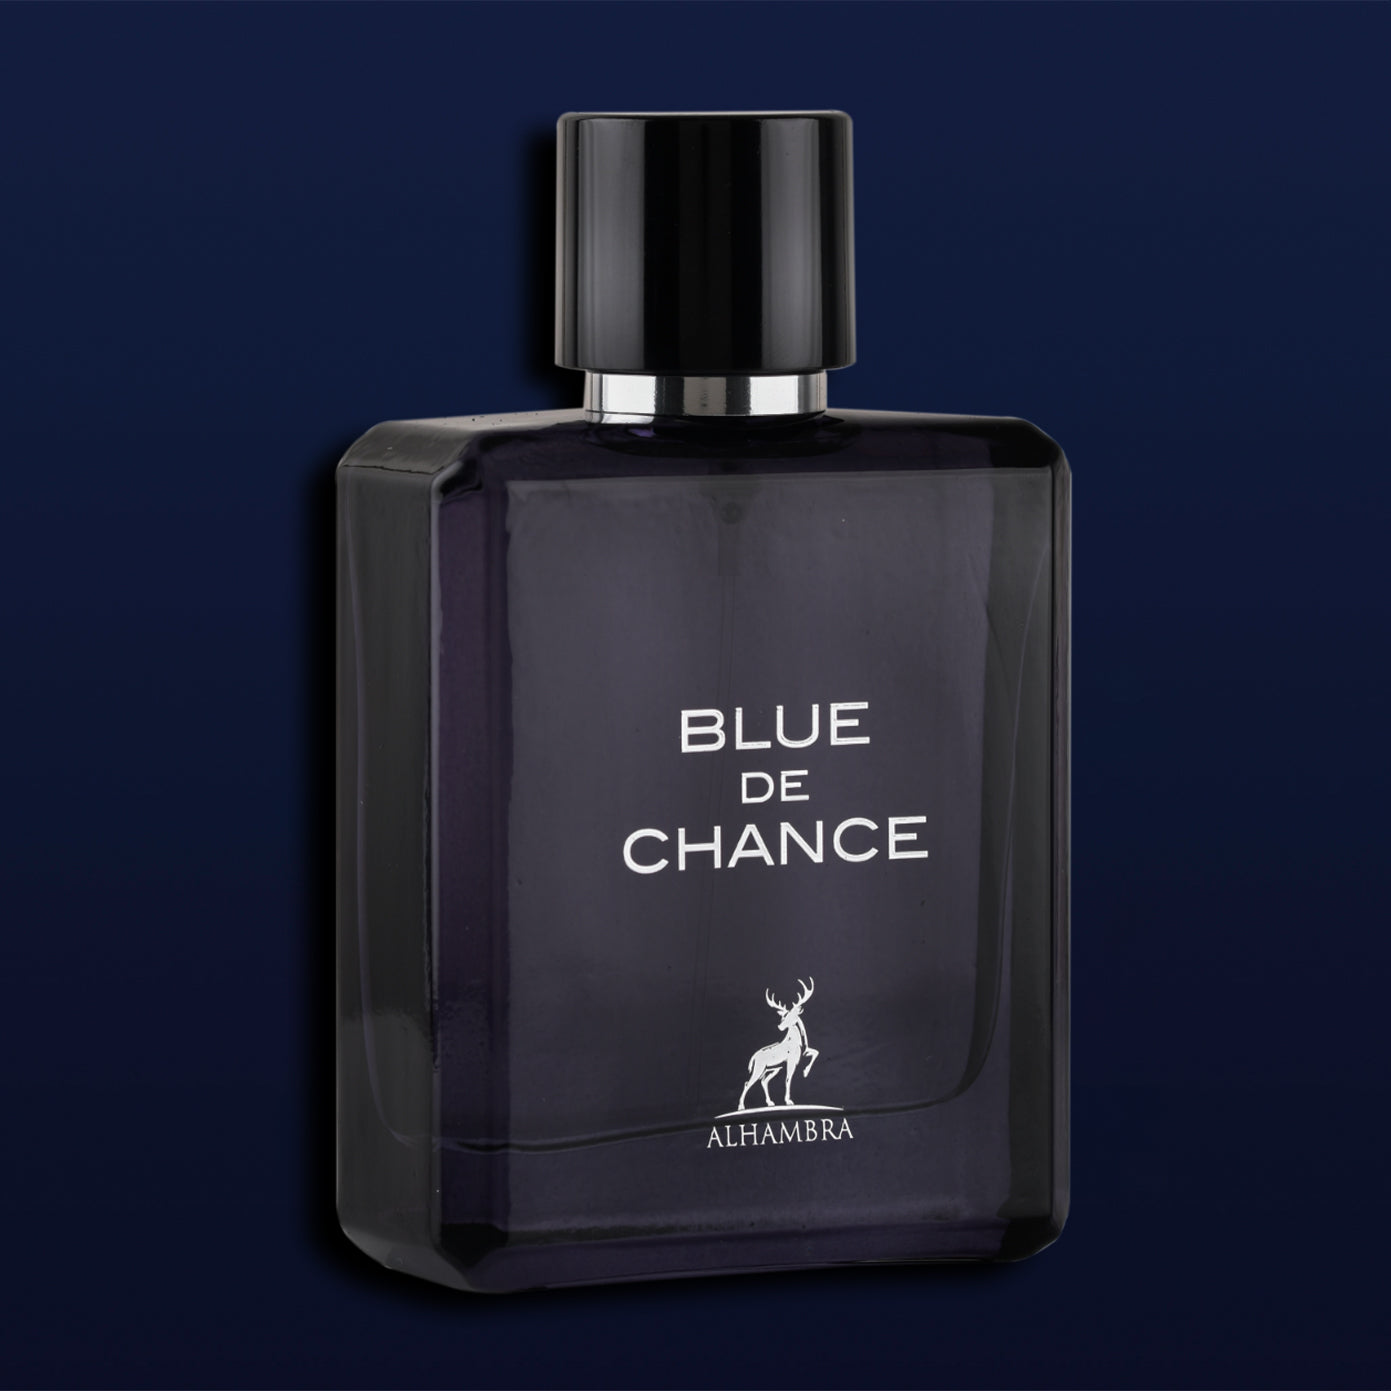 Perfume Samples Online, Buy Niche Fragrances & Decants